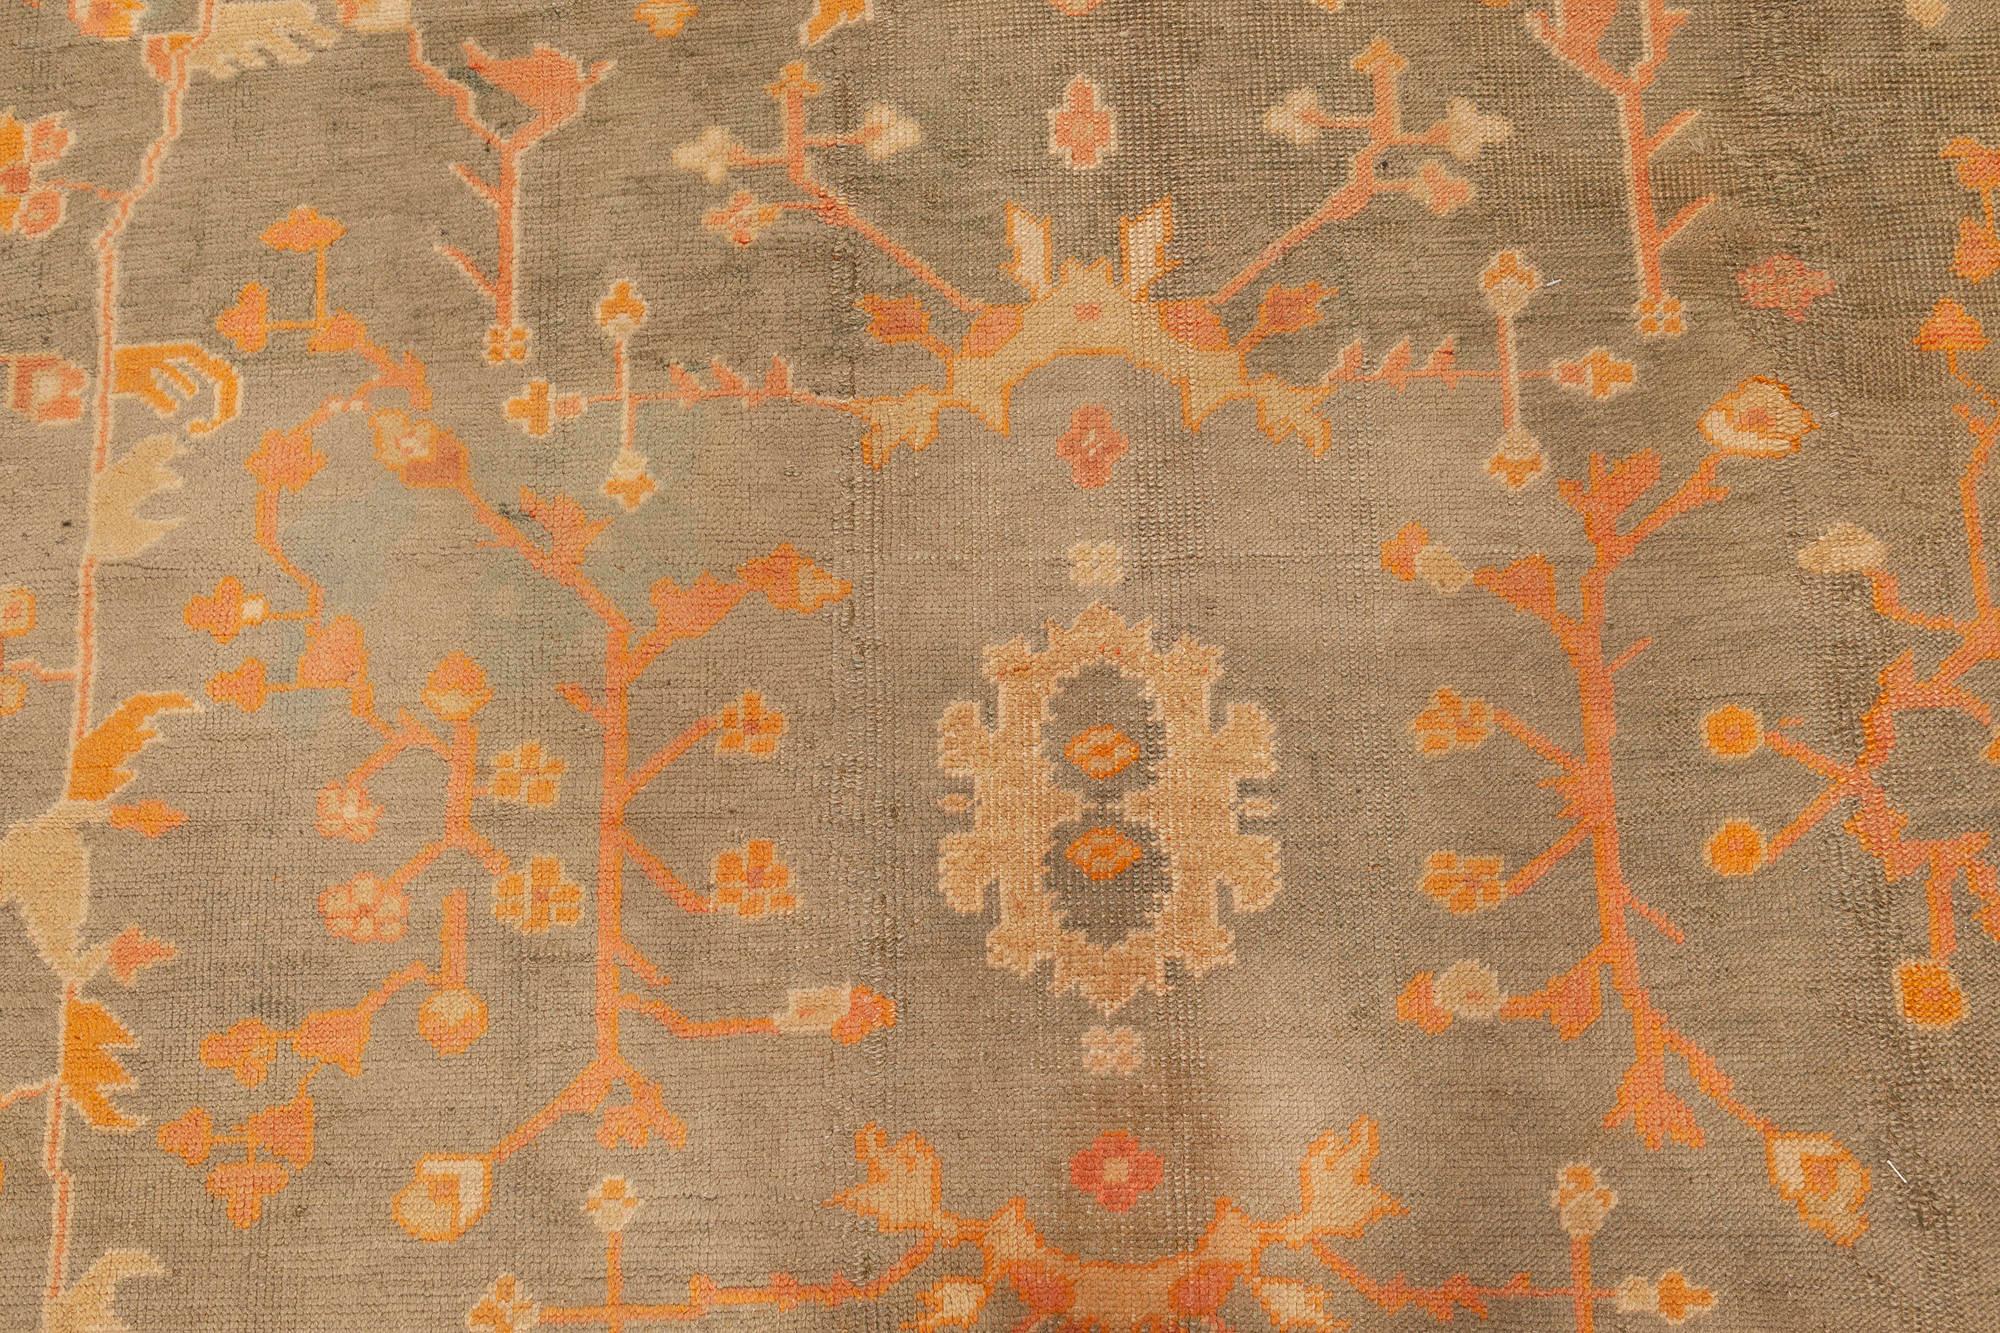 Antique Turkish Oushak beige, gold, green, orange wool rug
Size: 10'6